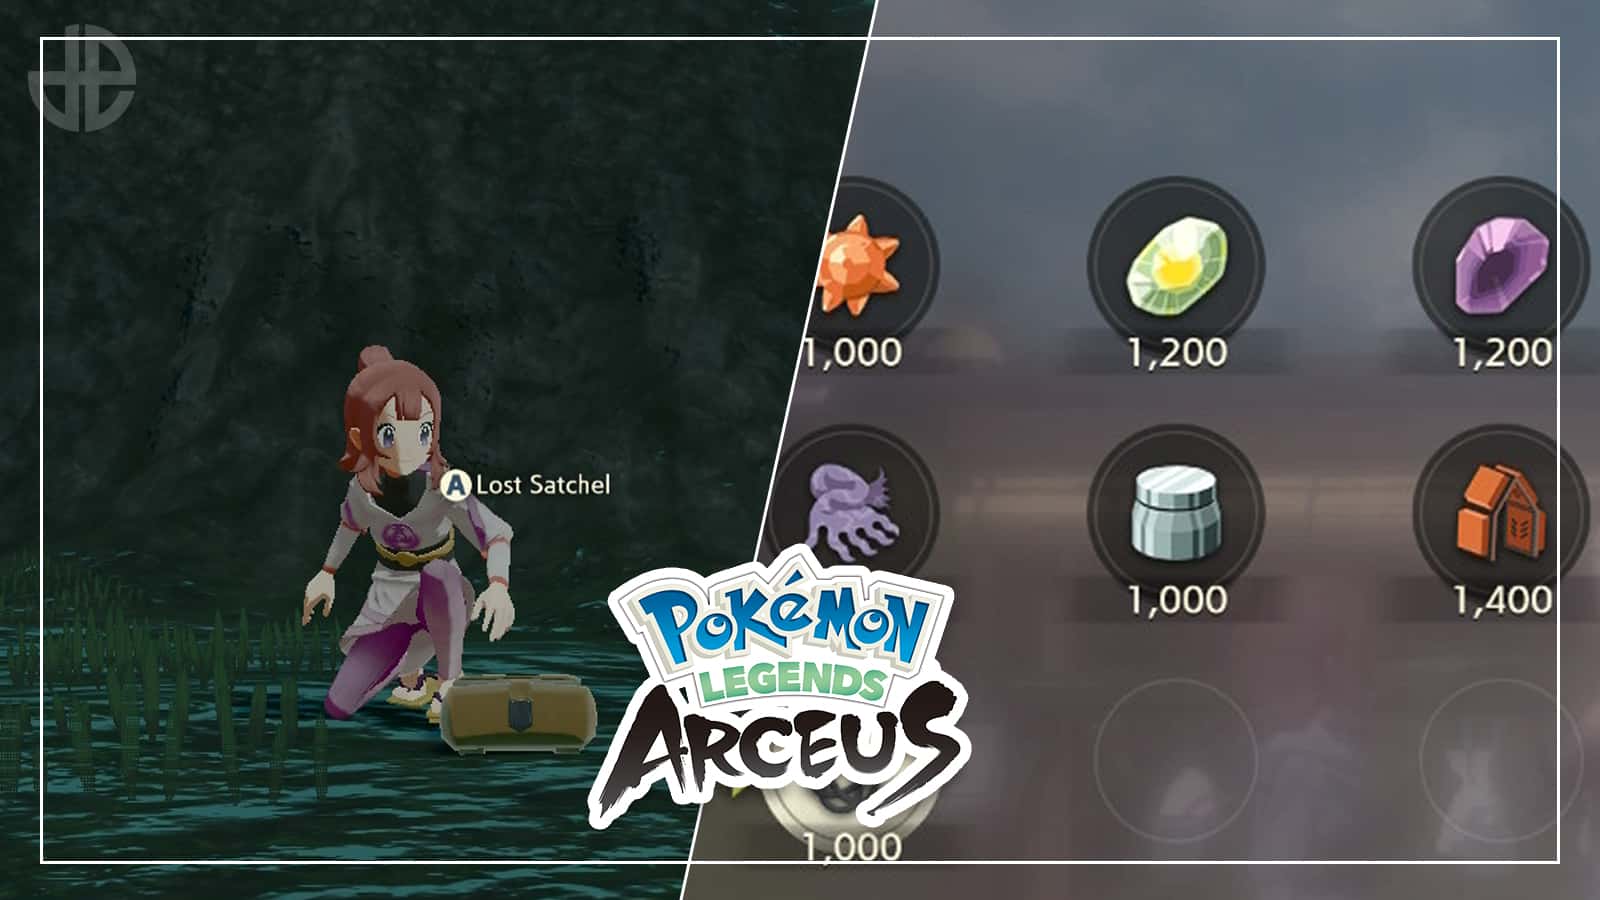 Pokemon Legends Arceus Merit Points and Satchel screenshot.